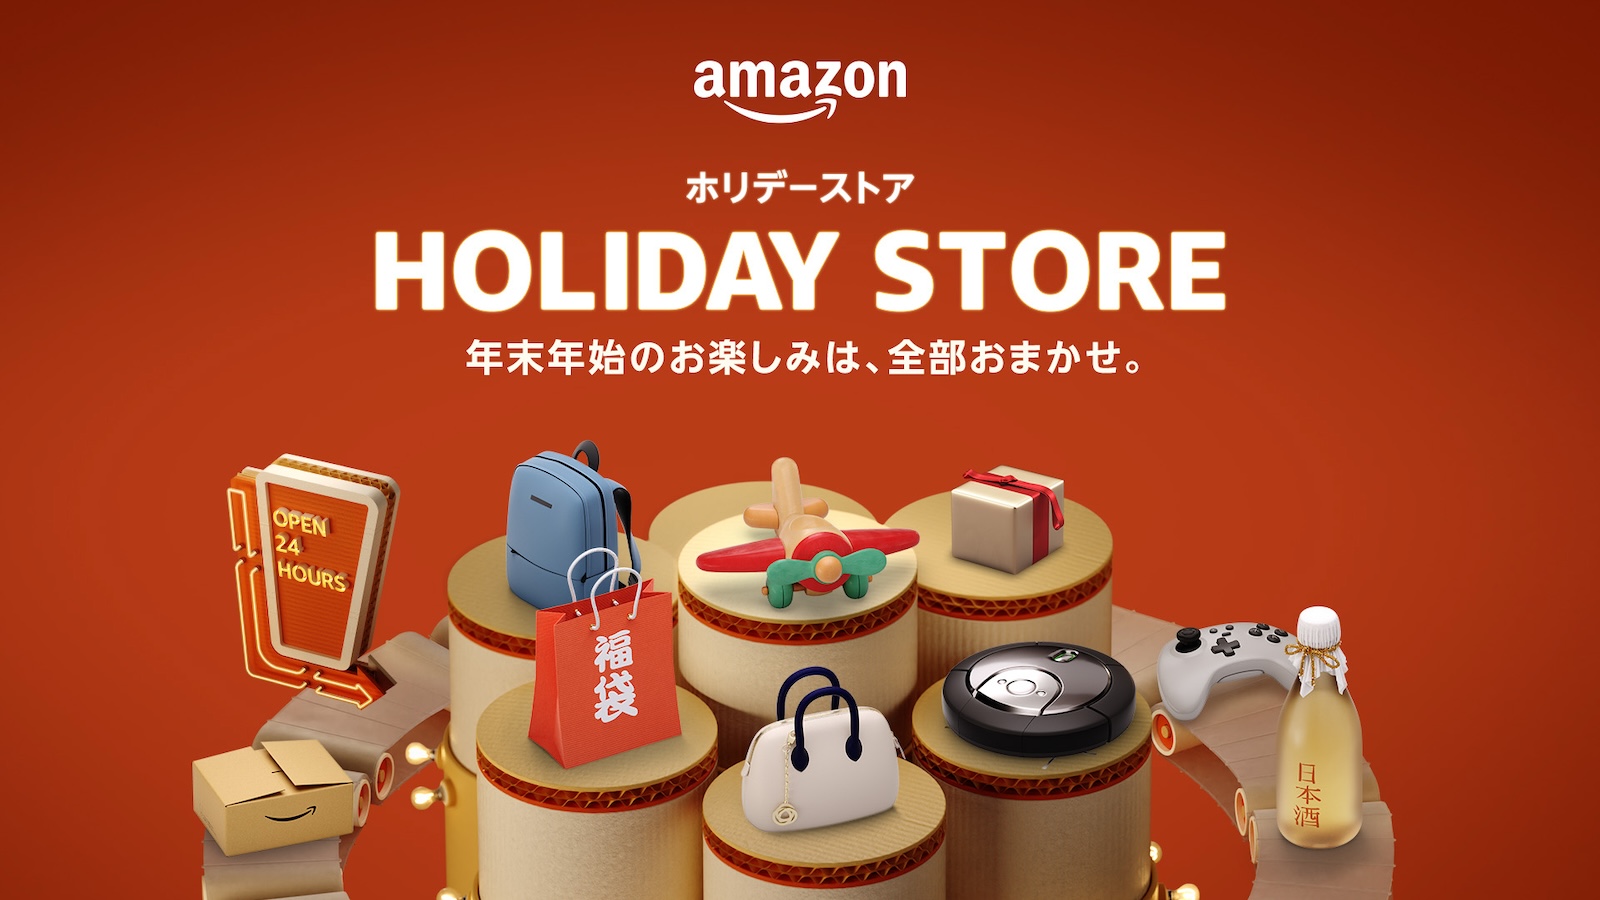 Amazon Holiday Store has opened